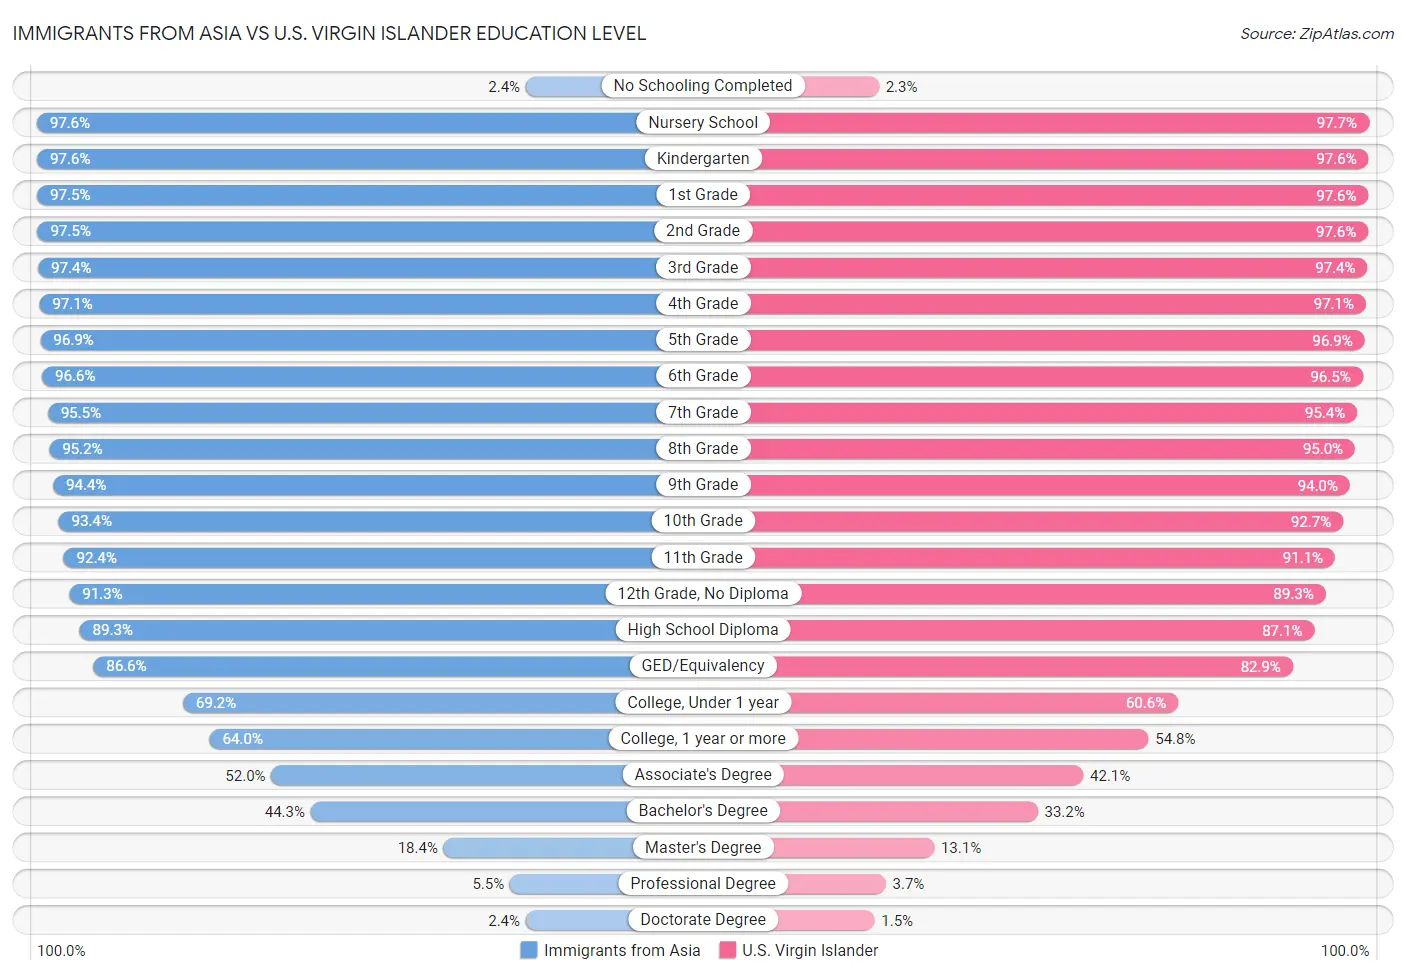 Immigrants from Asia vs U.S. Virgin Islander Education Level